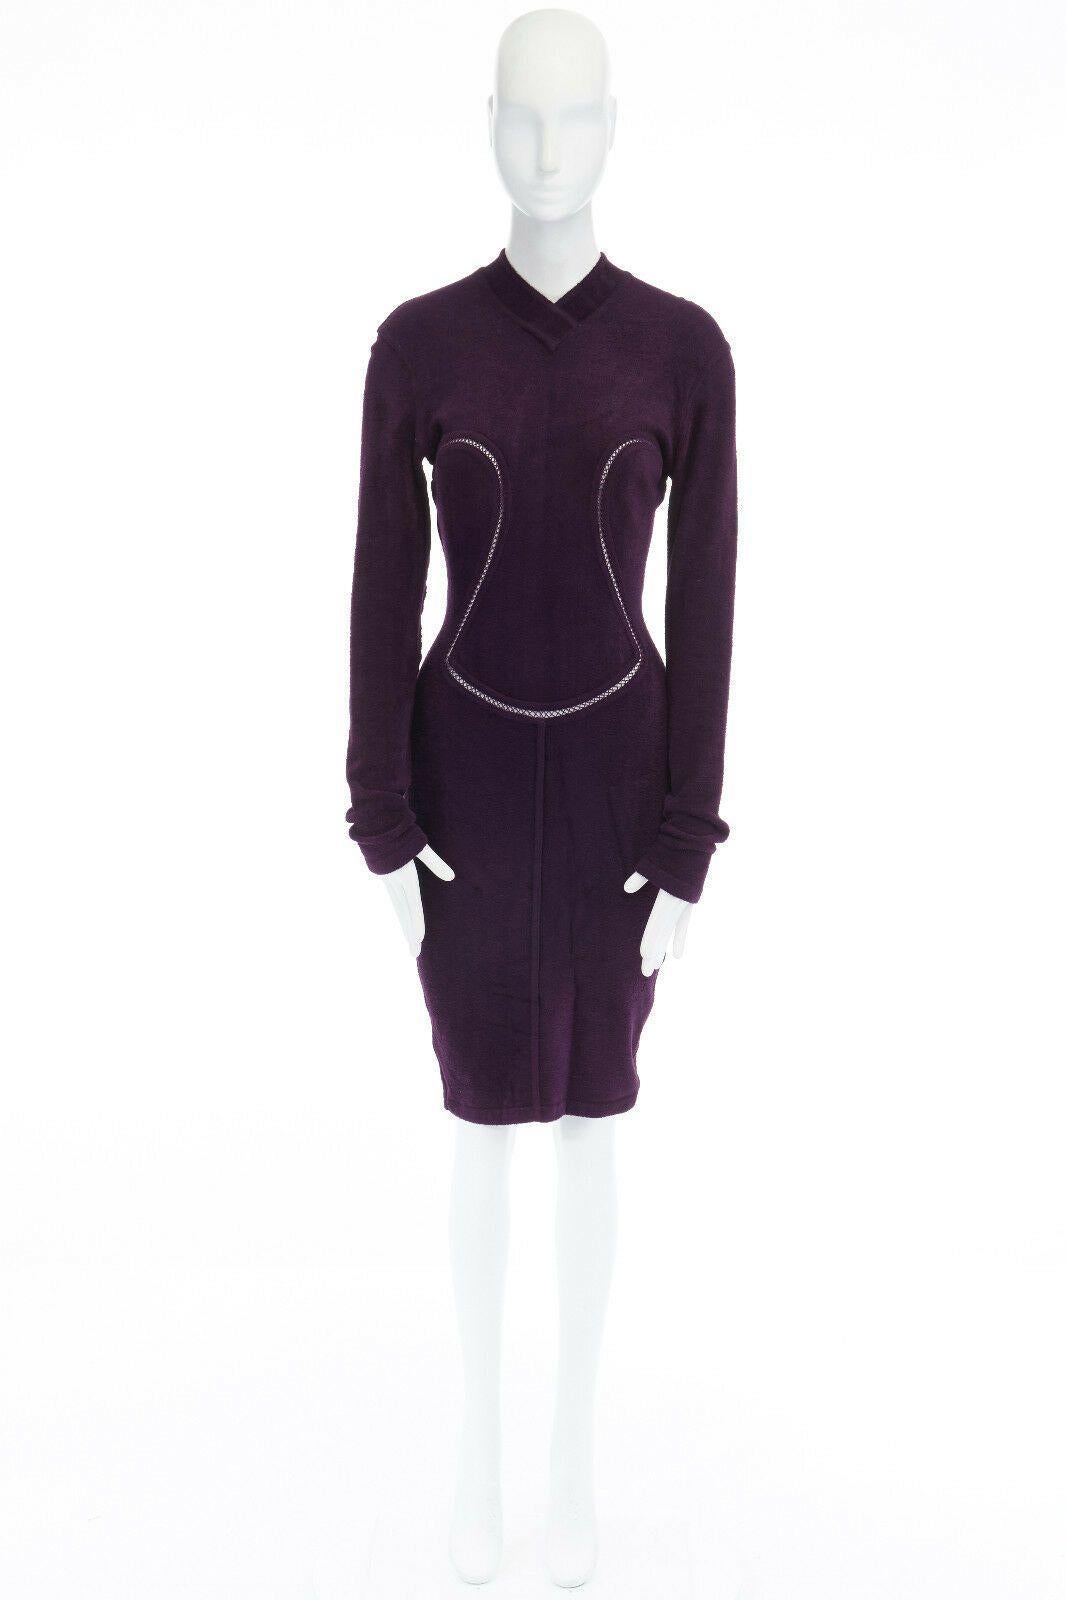 Black ALAIA Vintage purple chenille laddered seams bodycon stretch dress XS US2 UK8